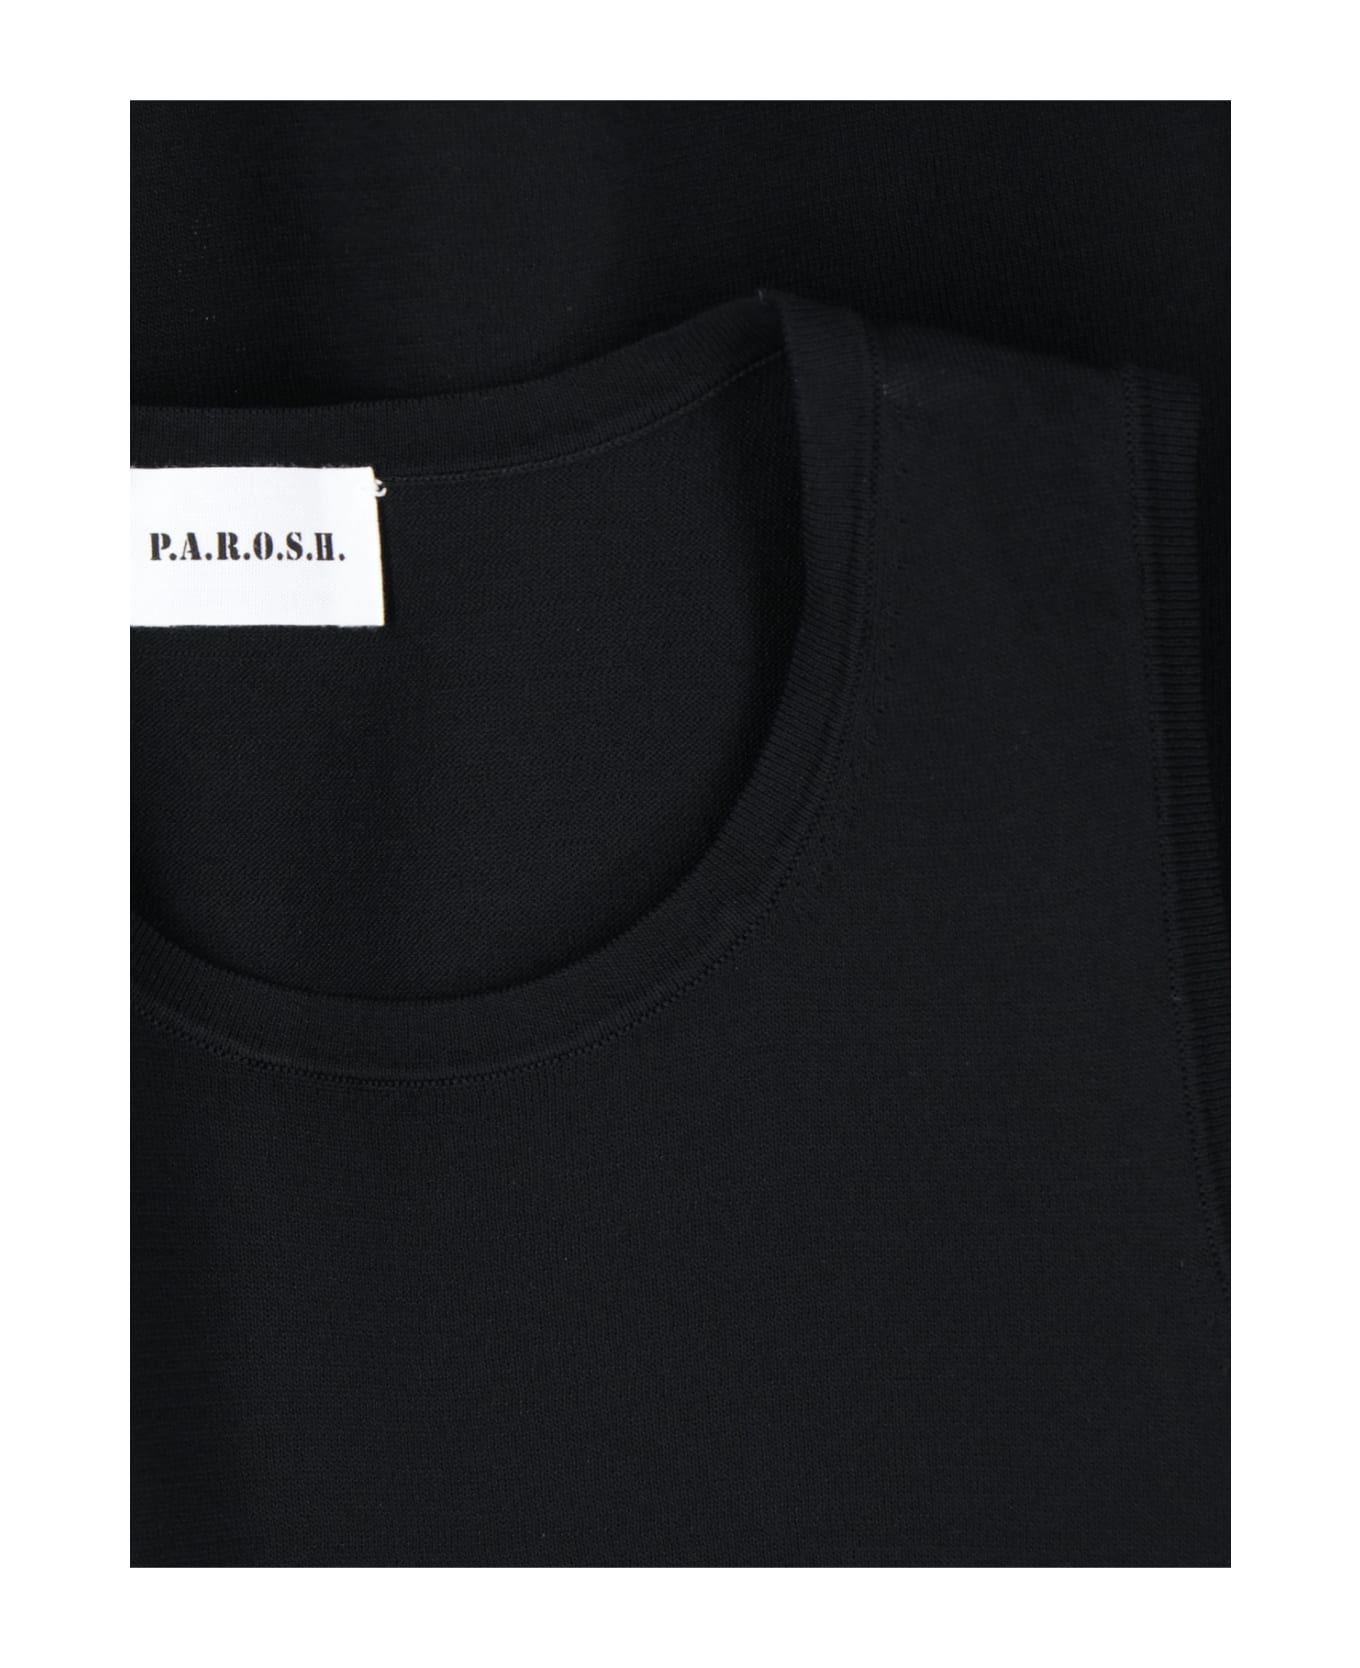 Parosh A-line Maxi Dress - Black   ワンピース＆ドレス